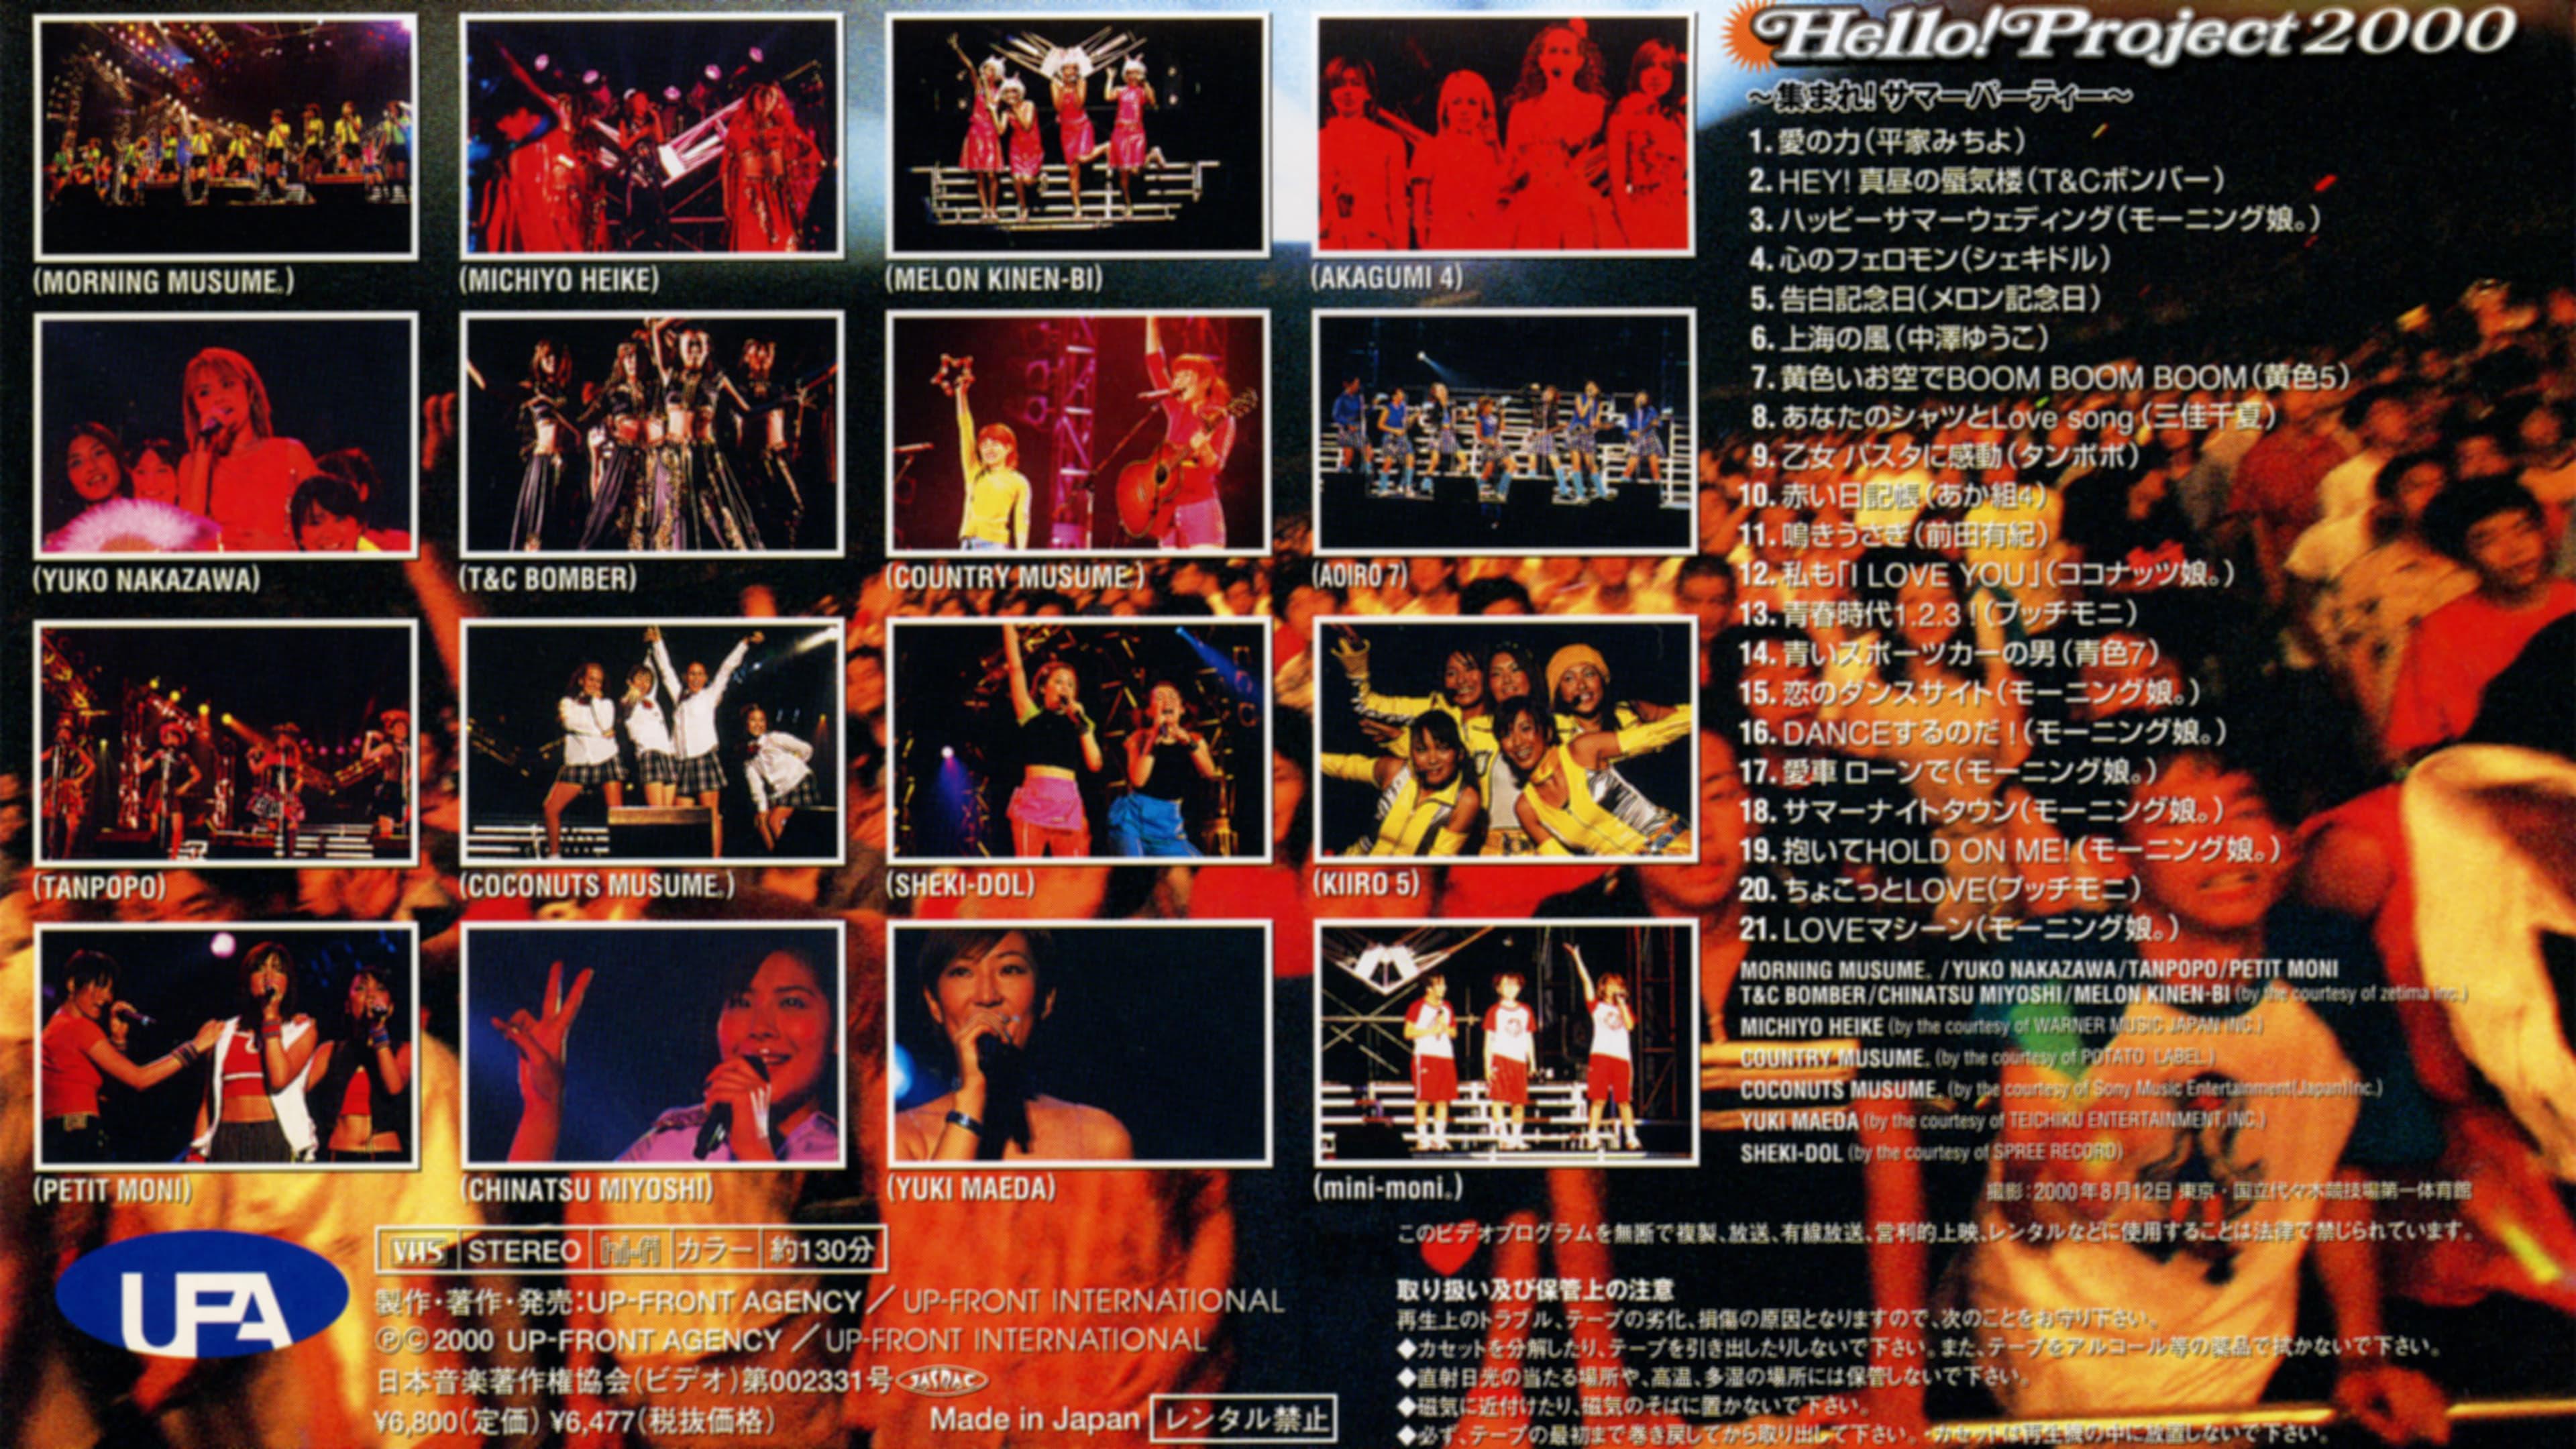 Hello! Project 2000 Summer ~Atsumare! Summer Party~ backdrop